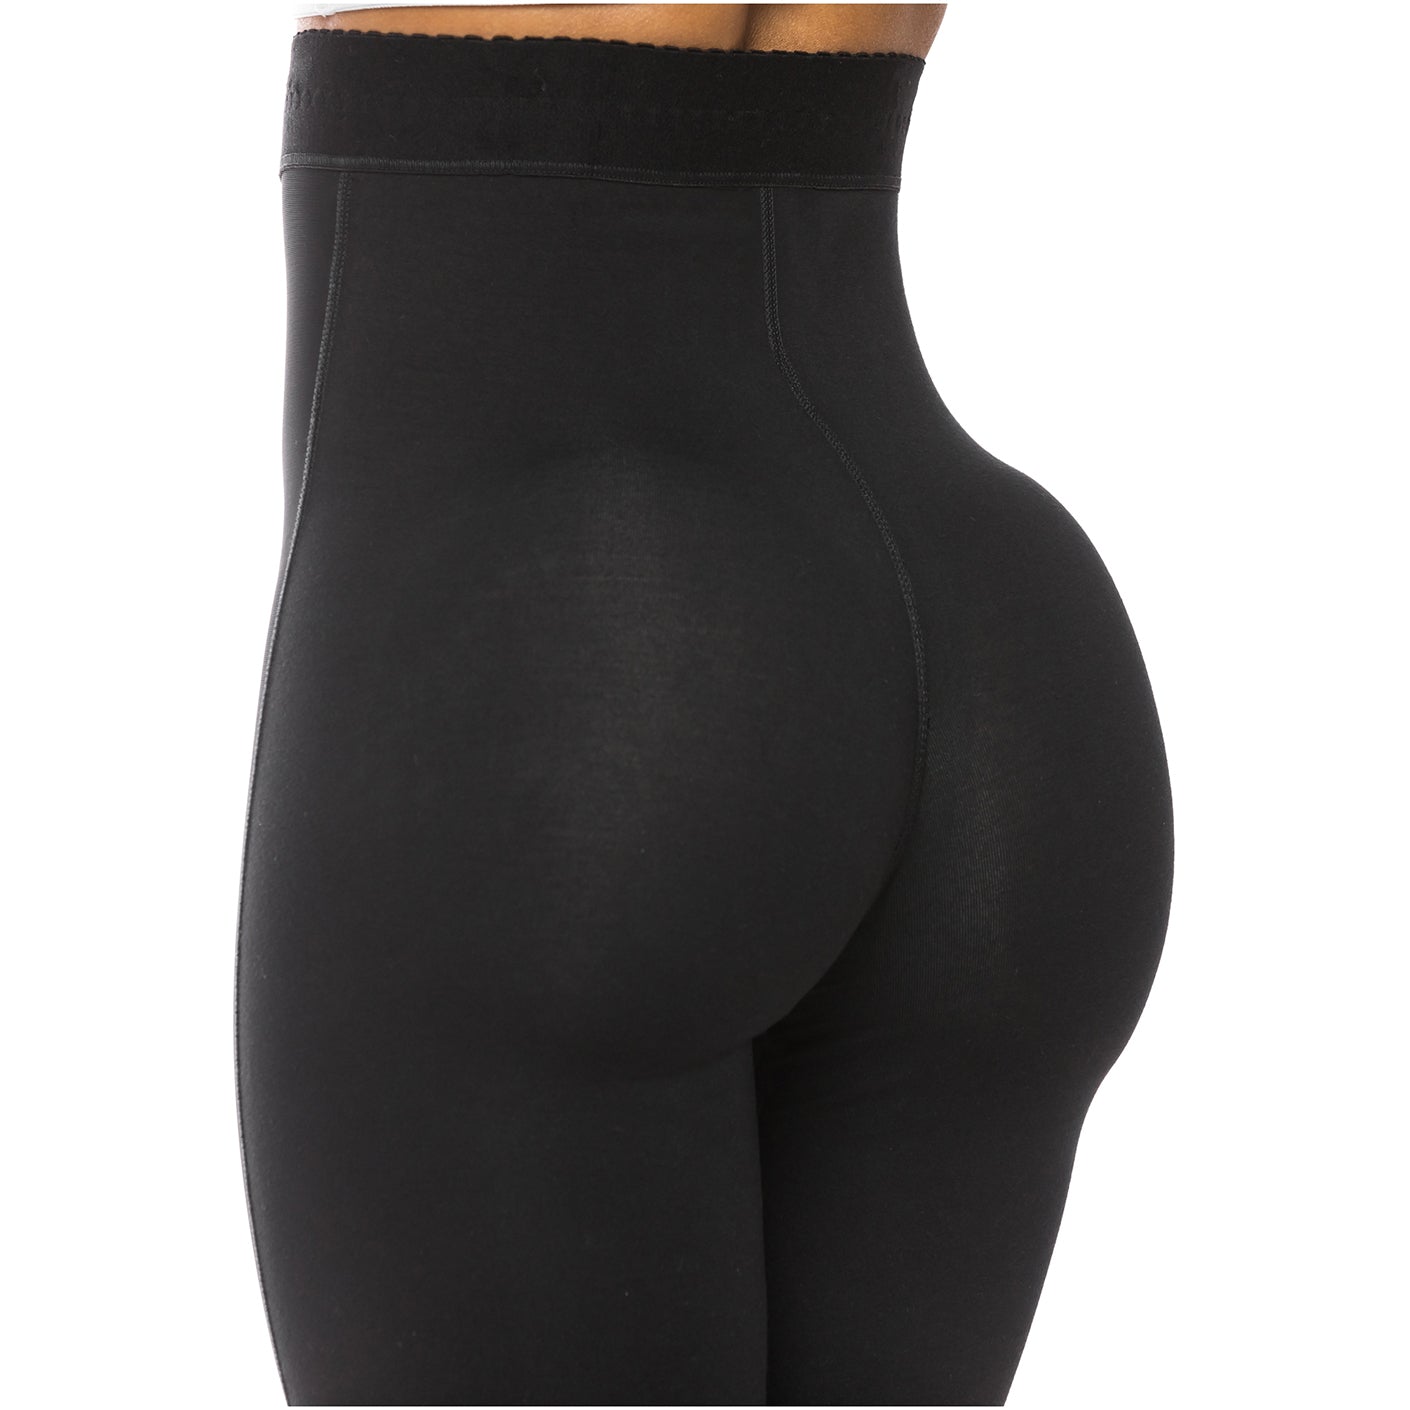 Short Especial-Leche Avena Shaper Colombianas Butt Lifting Underwear  Compression